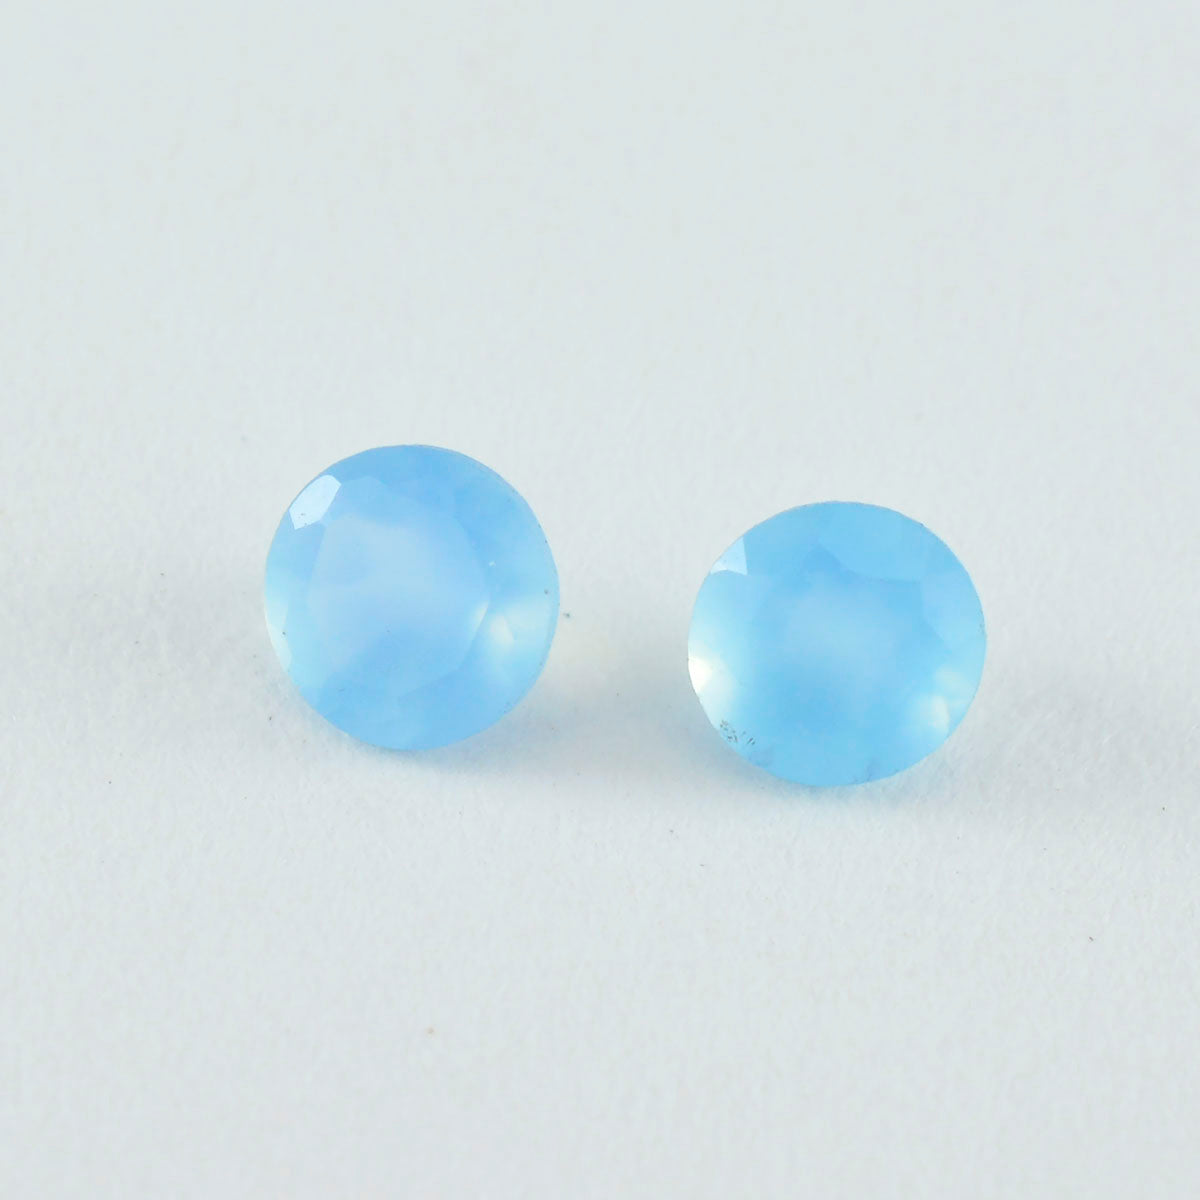 Riyogems 1PC Natural Blue Chalcedony Faceted 6x6 mm Round Shape wonderful Quality Gems